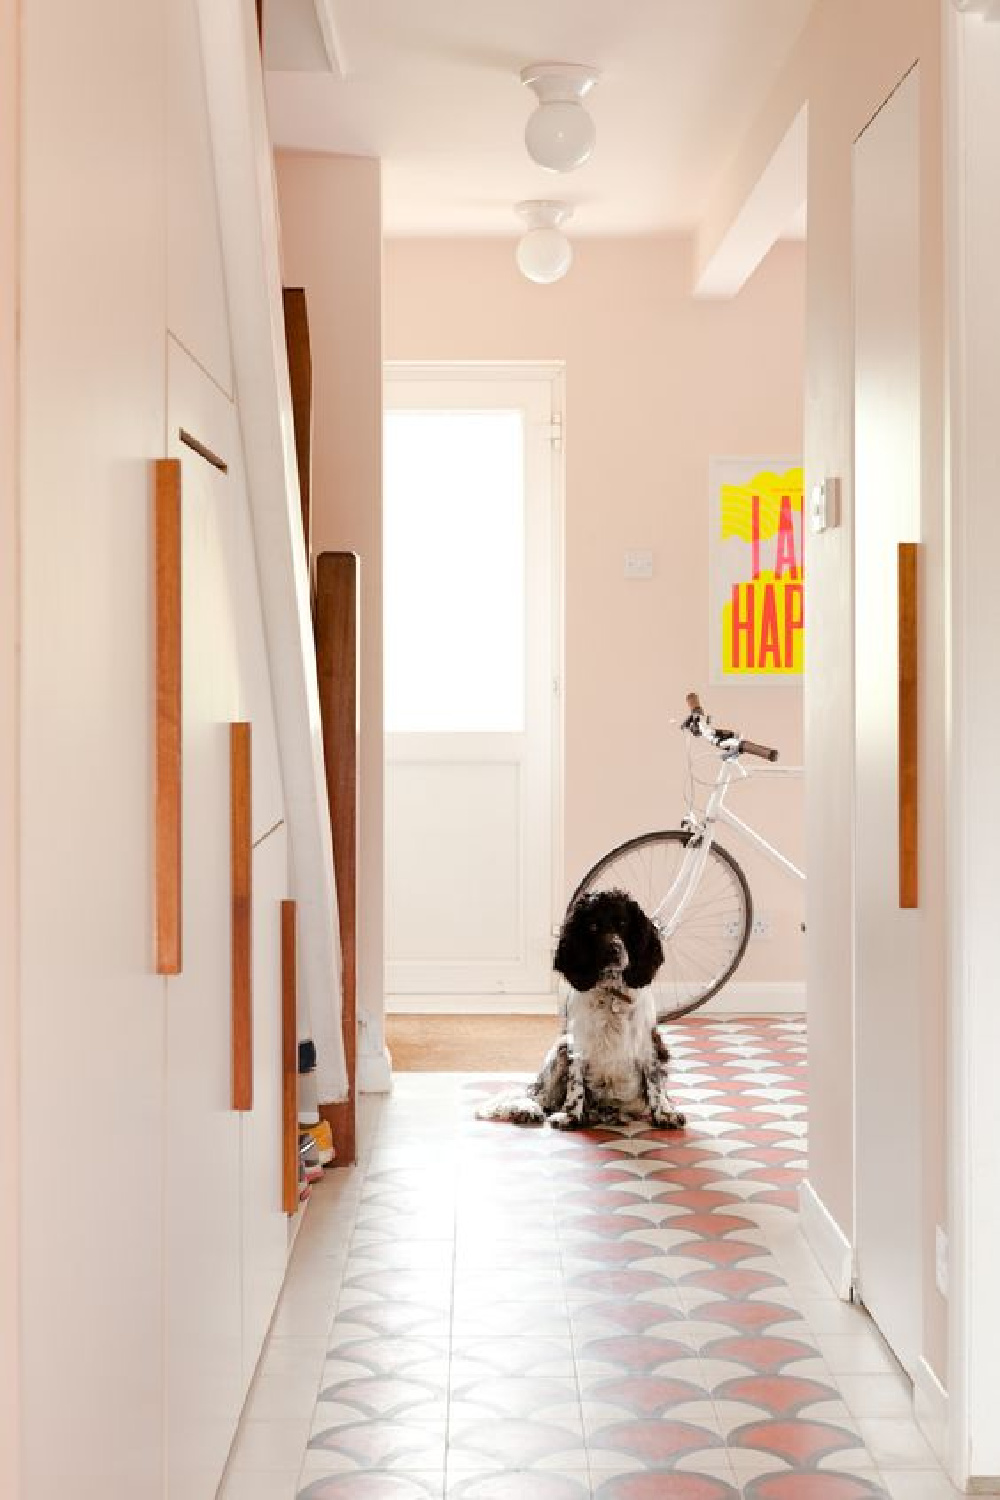 Hallway - 'mosaic del sur' ceramic concrete tiles, F&B pink ground paint colour, bespoke under-stair storage, cocker spaniel dog